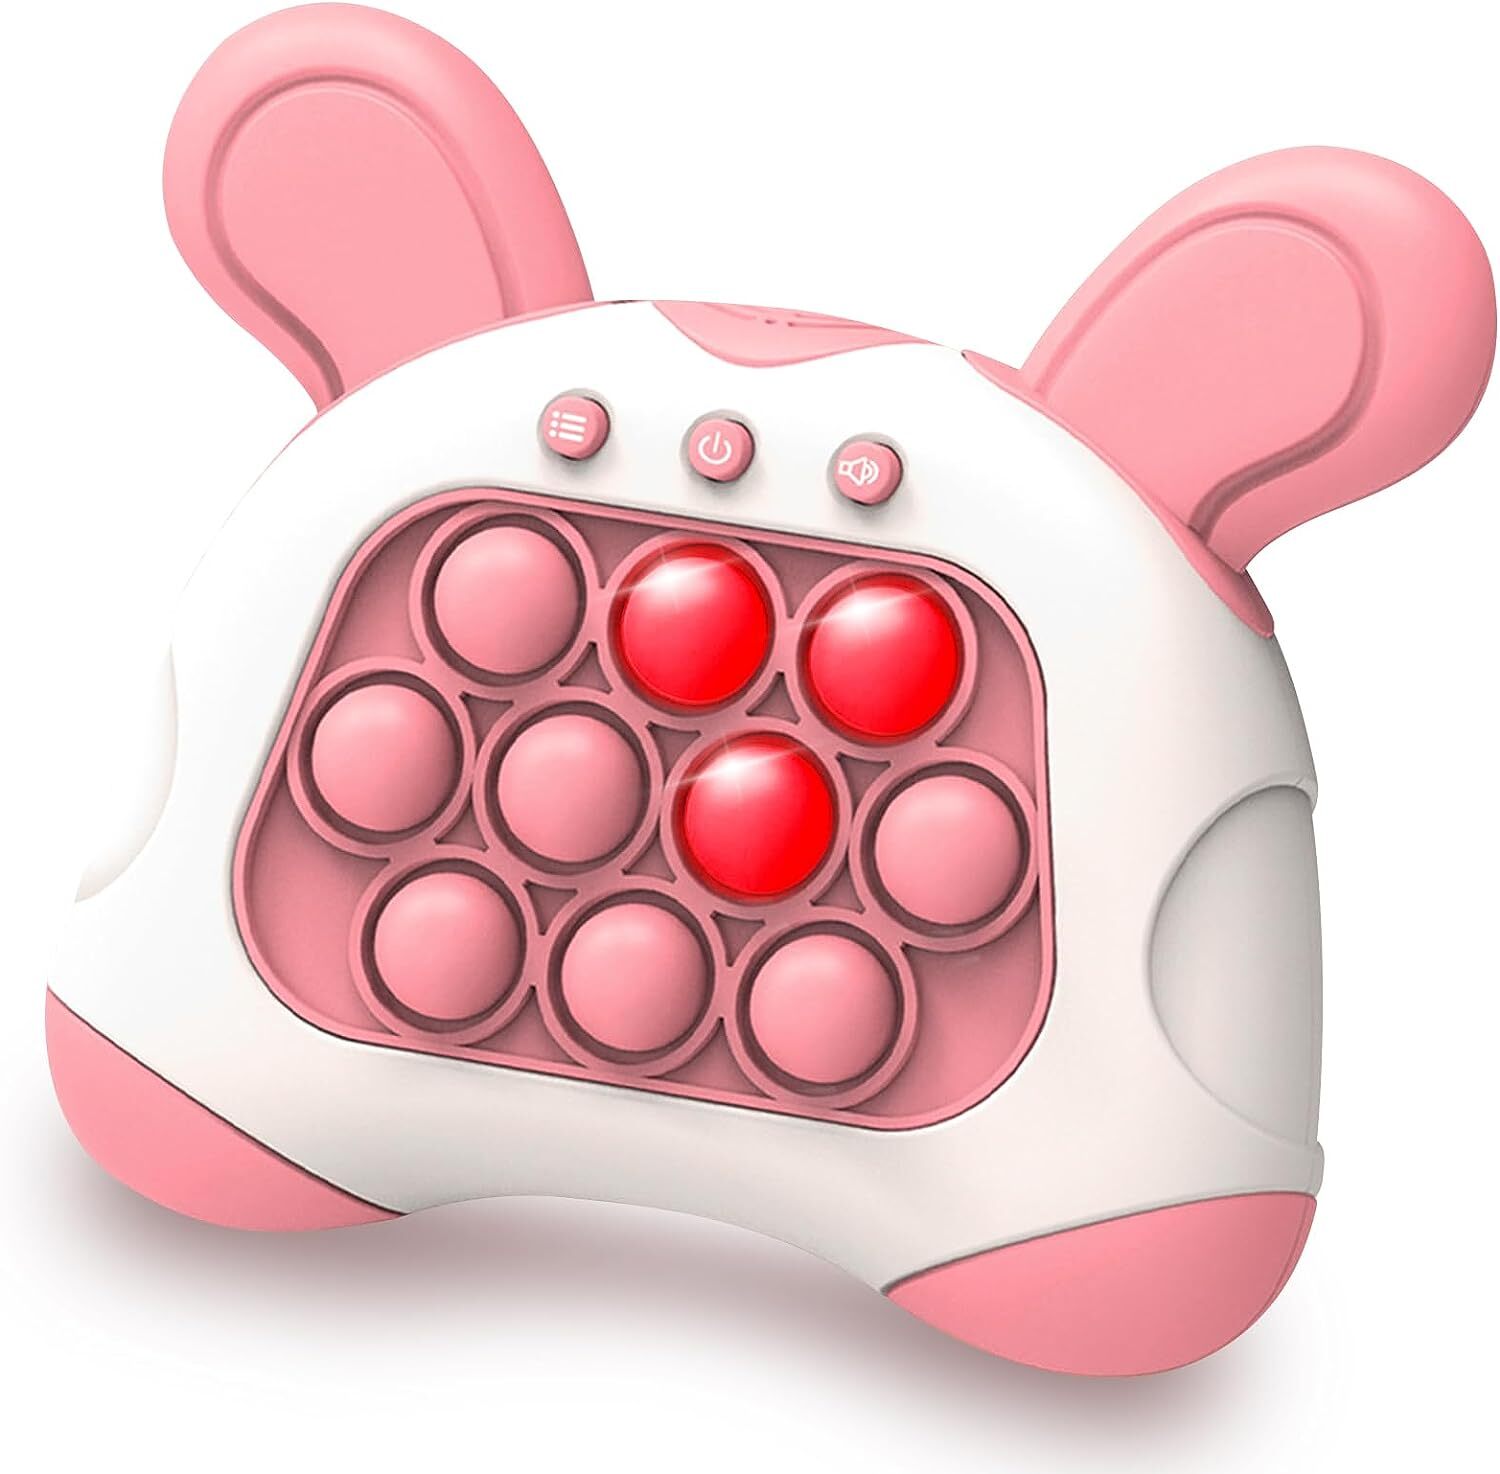 Light Up Push Pop Puzzle Eletric Handheld Game Console Fidget Toy Machine (Pink Rabbit)